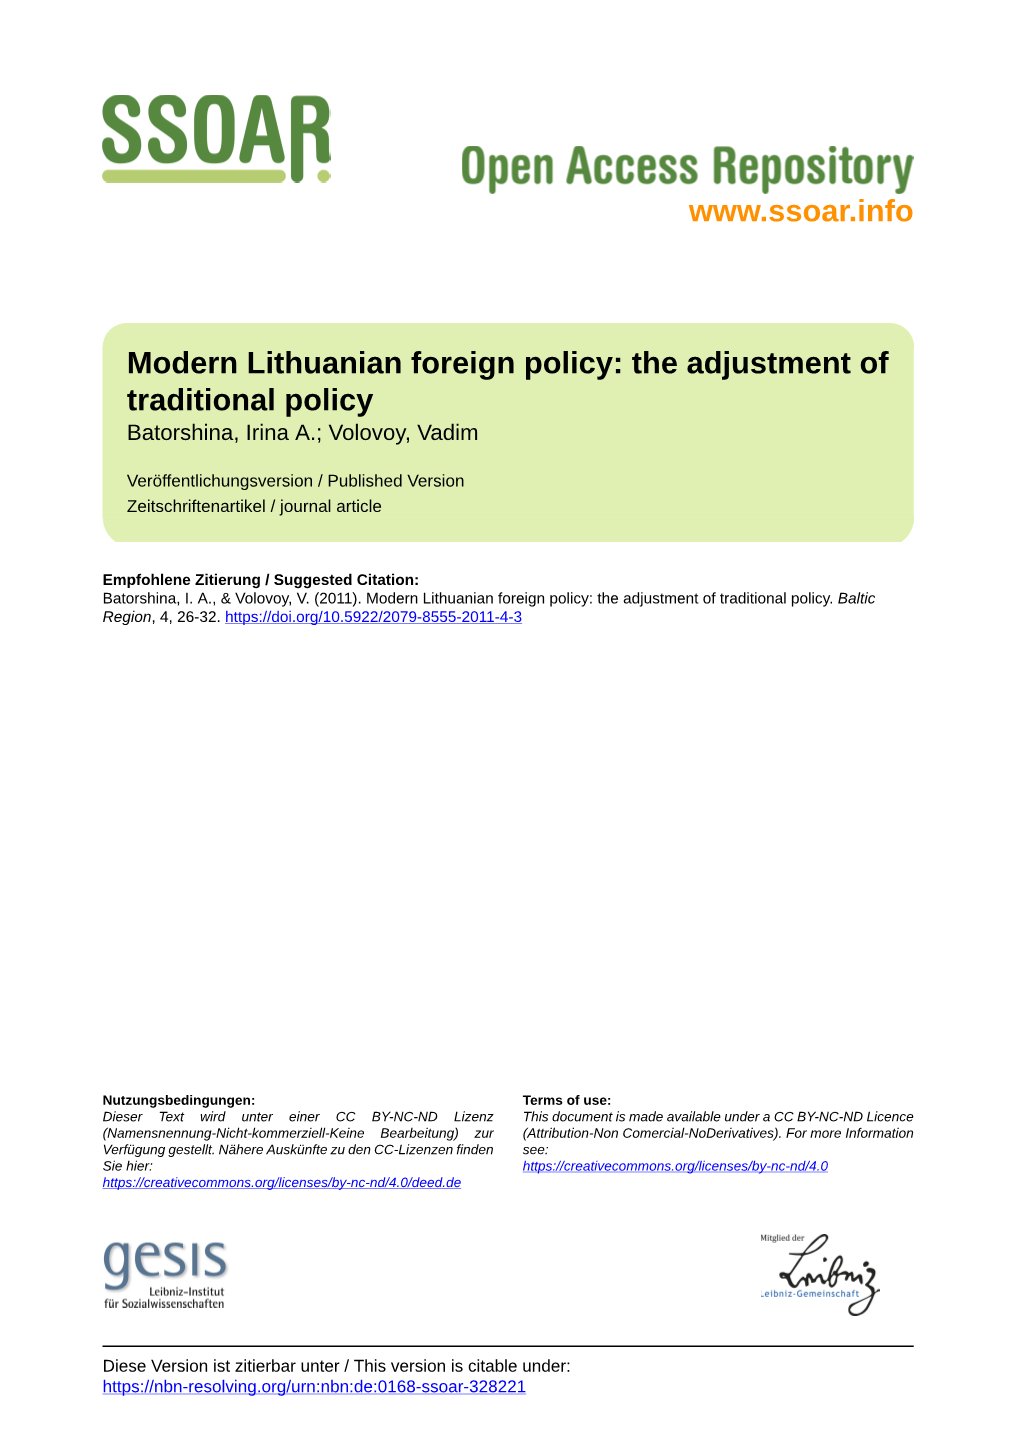 Modern Lithuanian Foreign Policy: the Adjustment of Traditional Policy Batorshina, Irina A.; Volovoy, Vadim